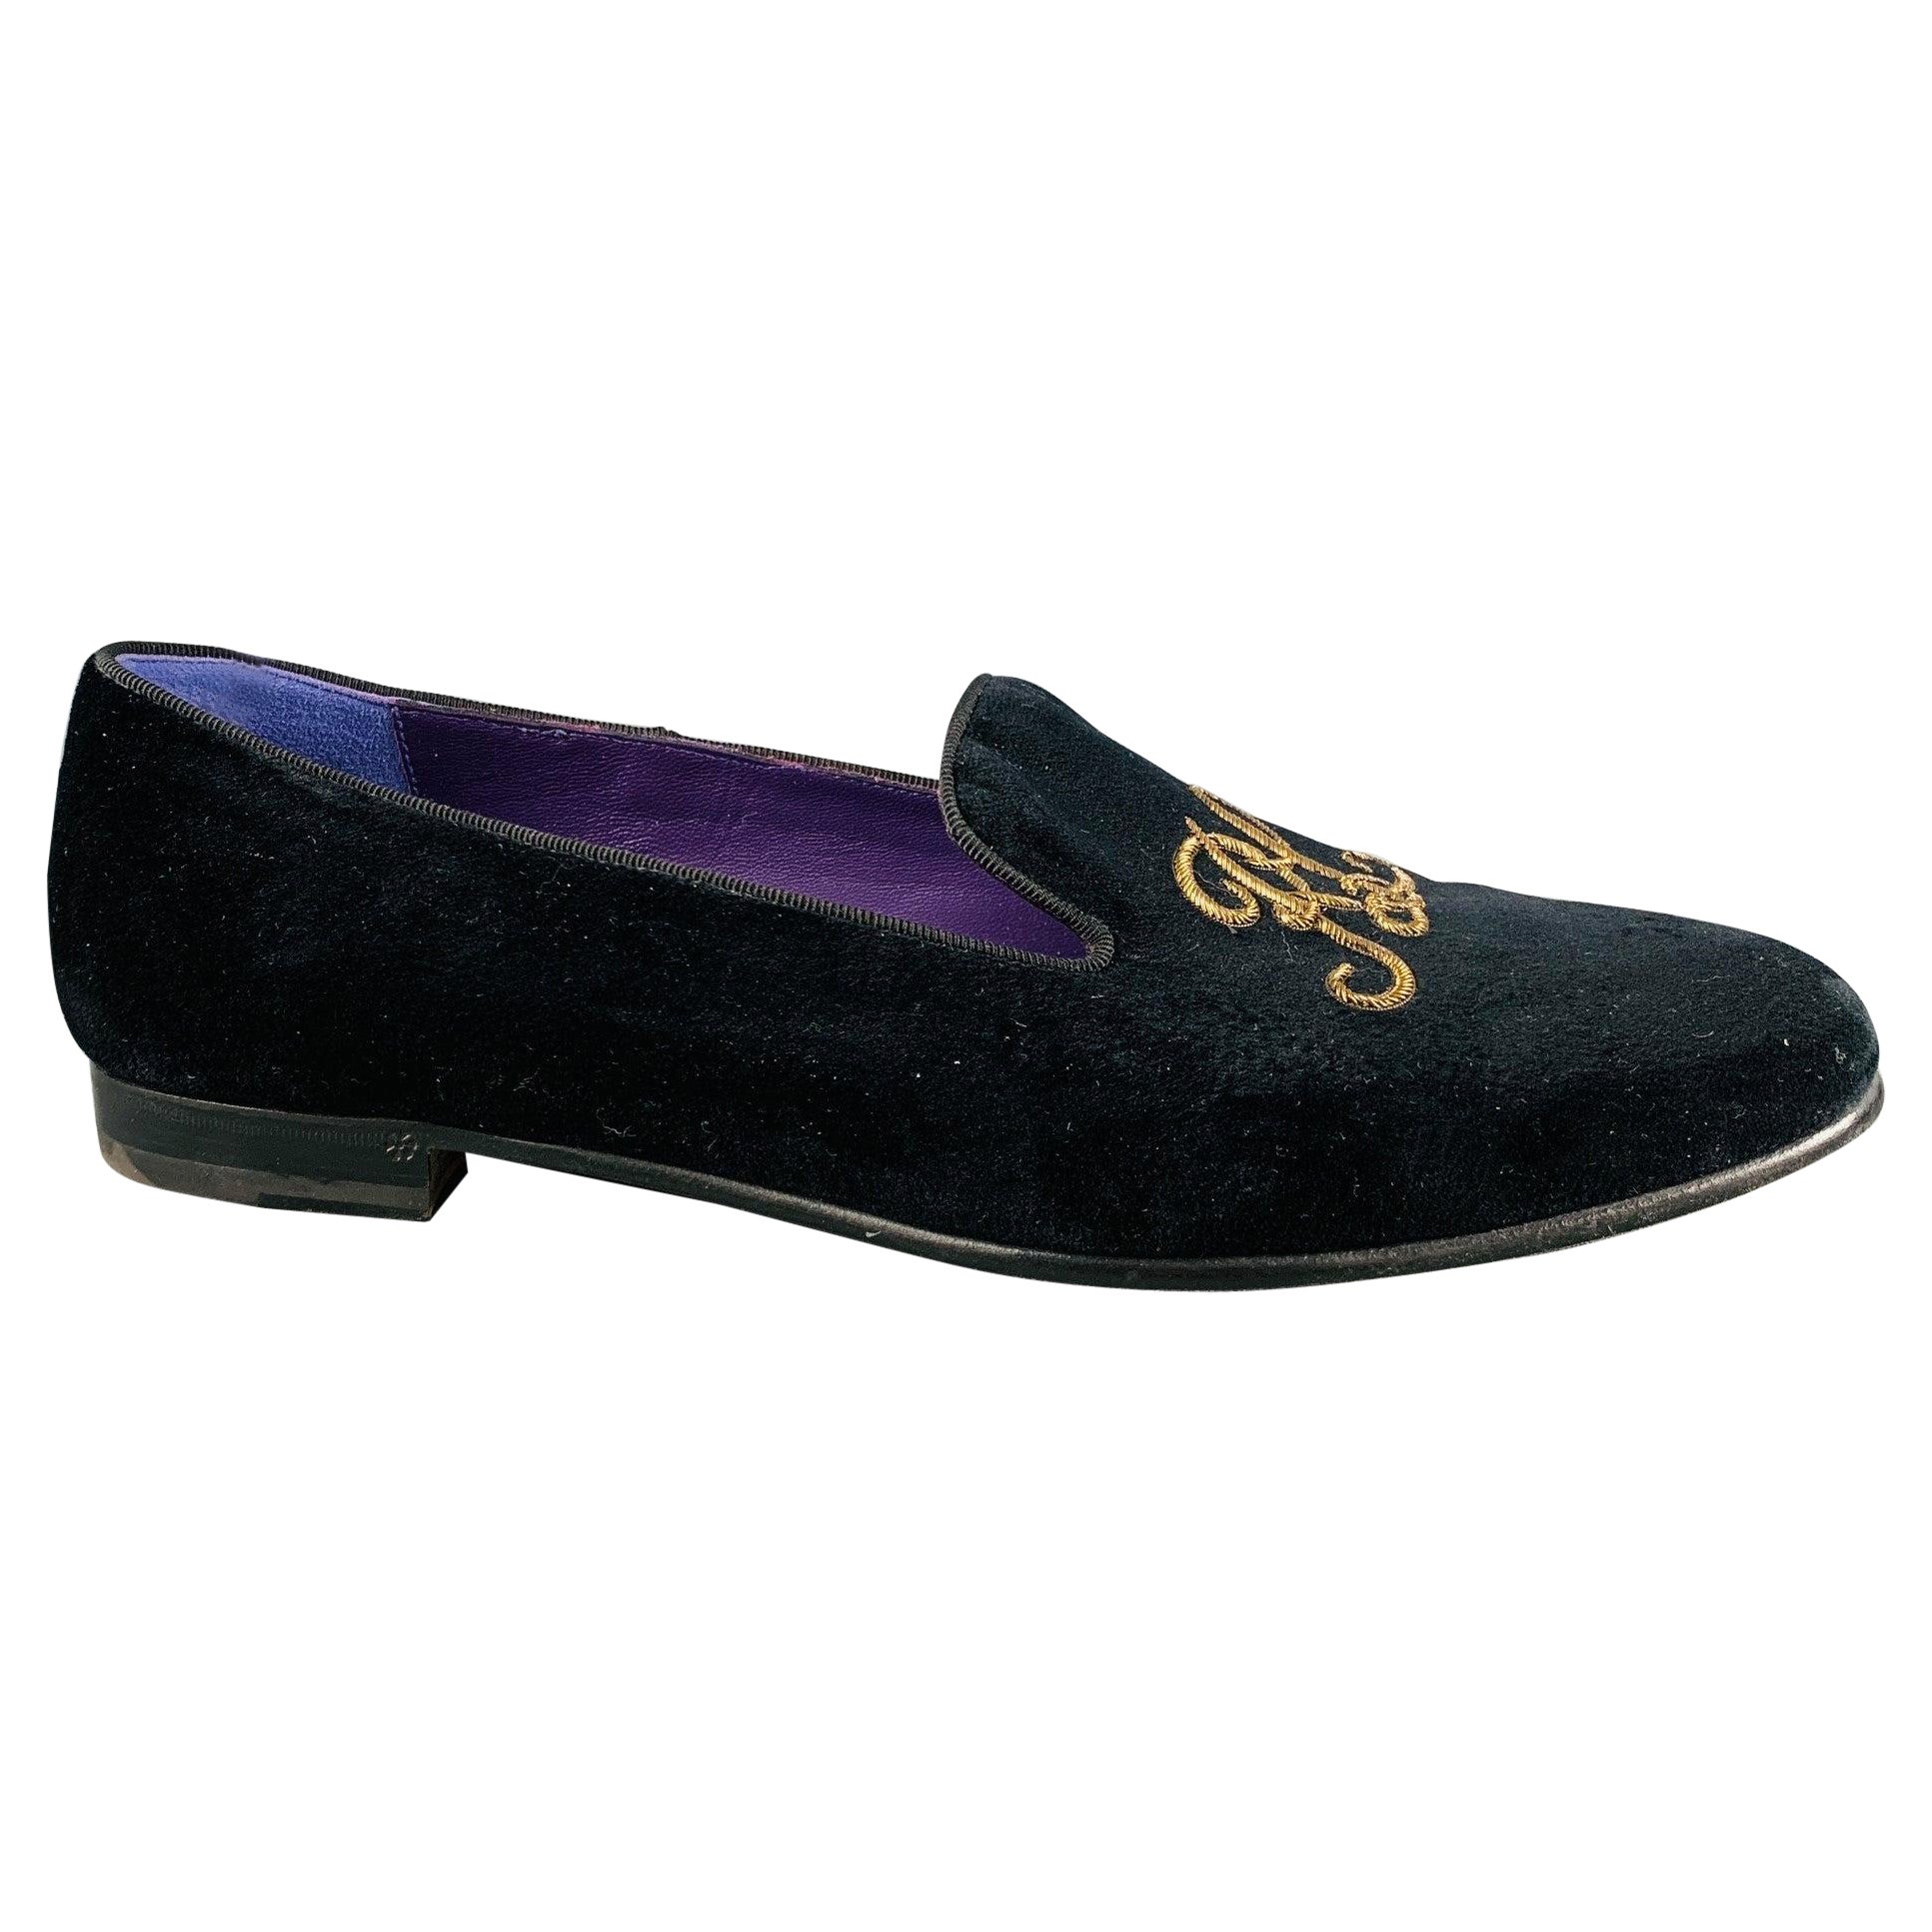 RALPH LAUREN Size 11 Black Gold Velvet Embroidered Loafer Flats For Sale